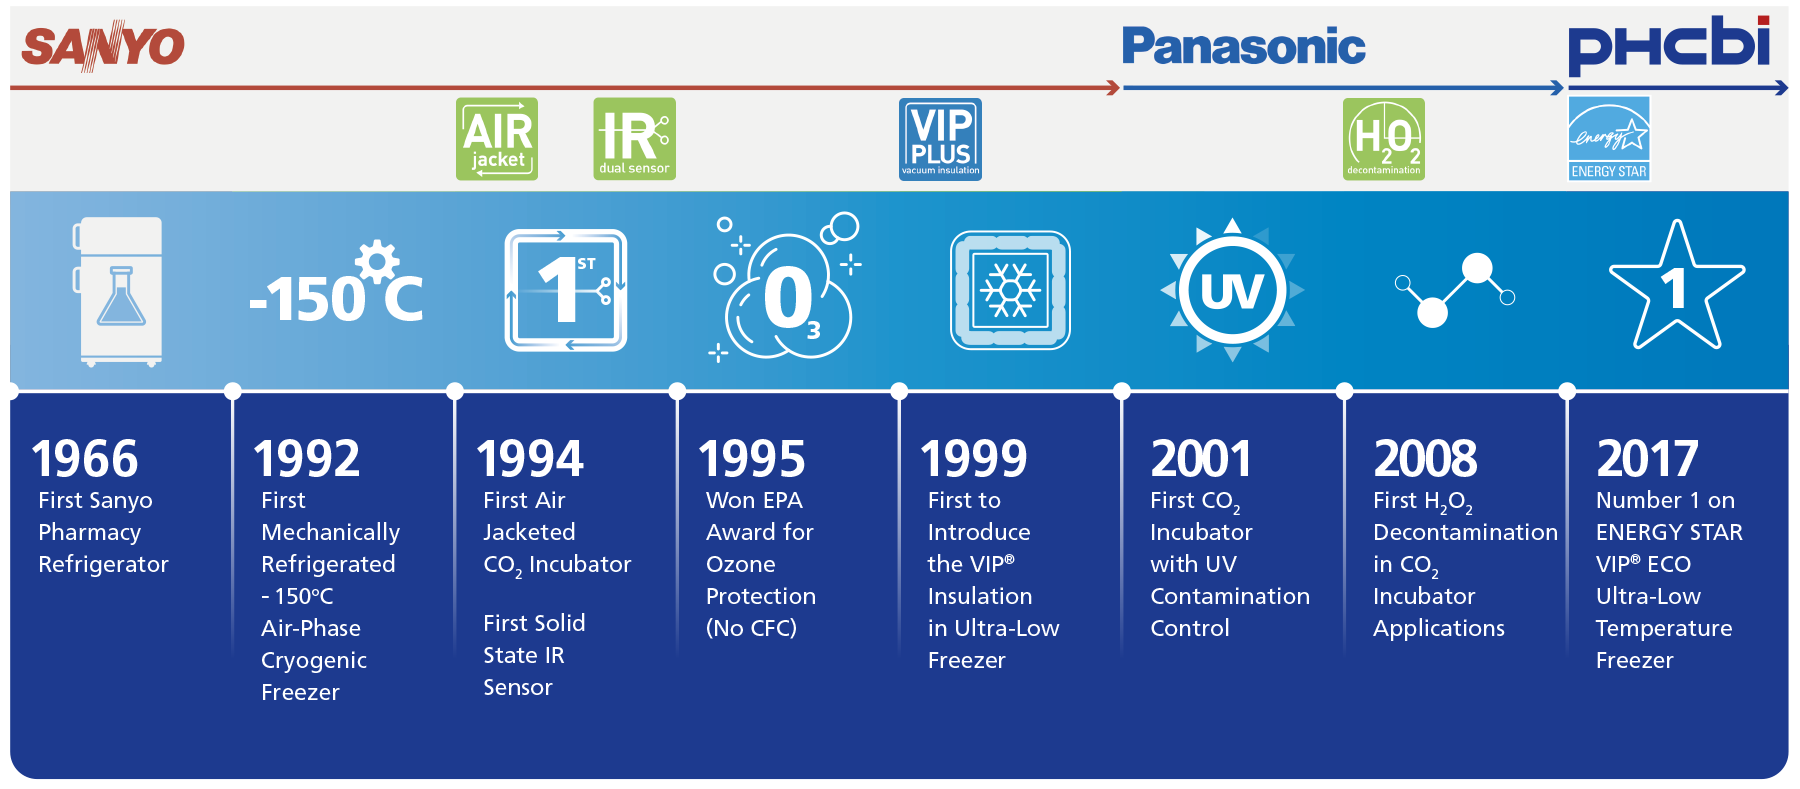 Sanyo to Panasonic to PHCbi brand timeline